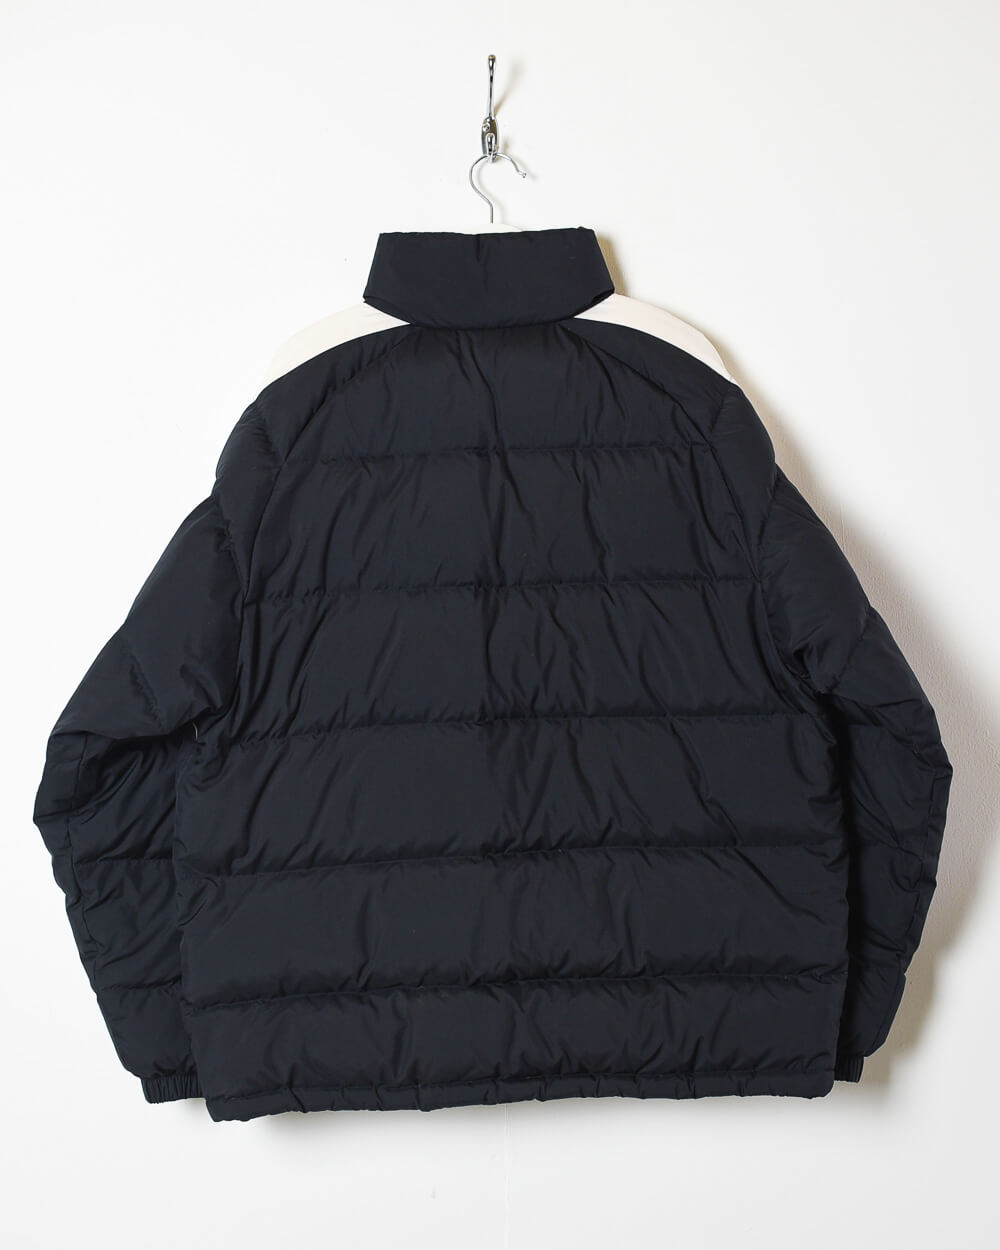 Black Fila Down Puffer Jacket - Medium